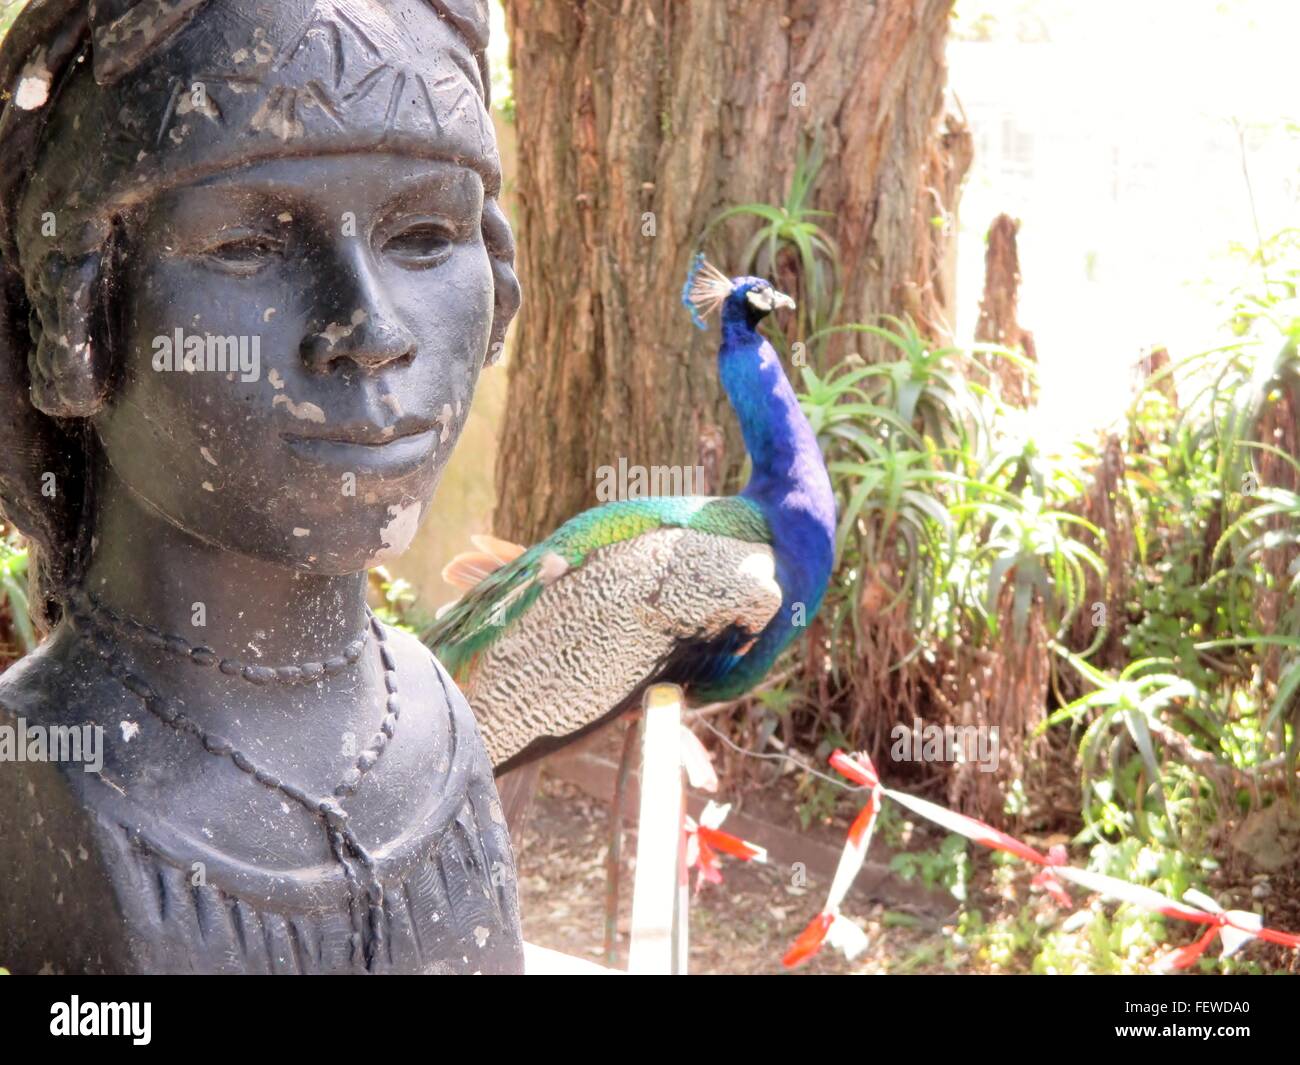 Peacock In Garden, Weathered Sculpture Stock Photo